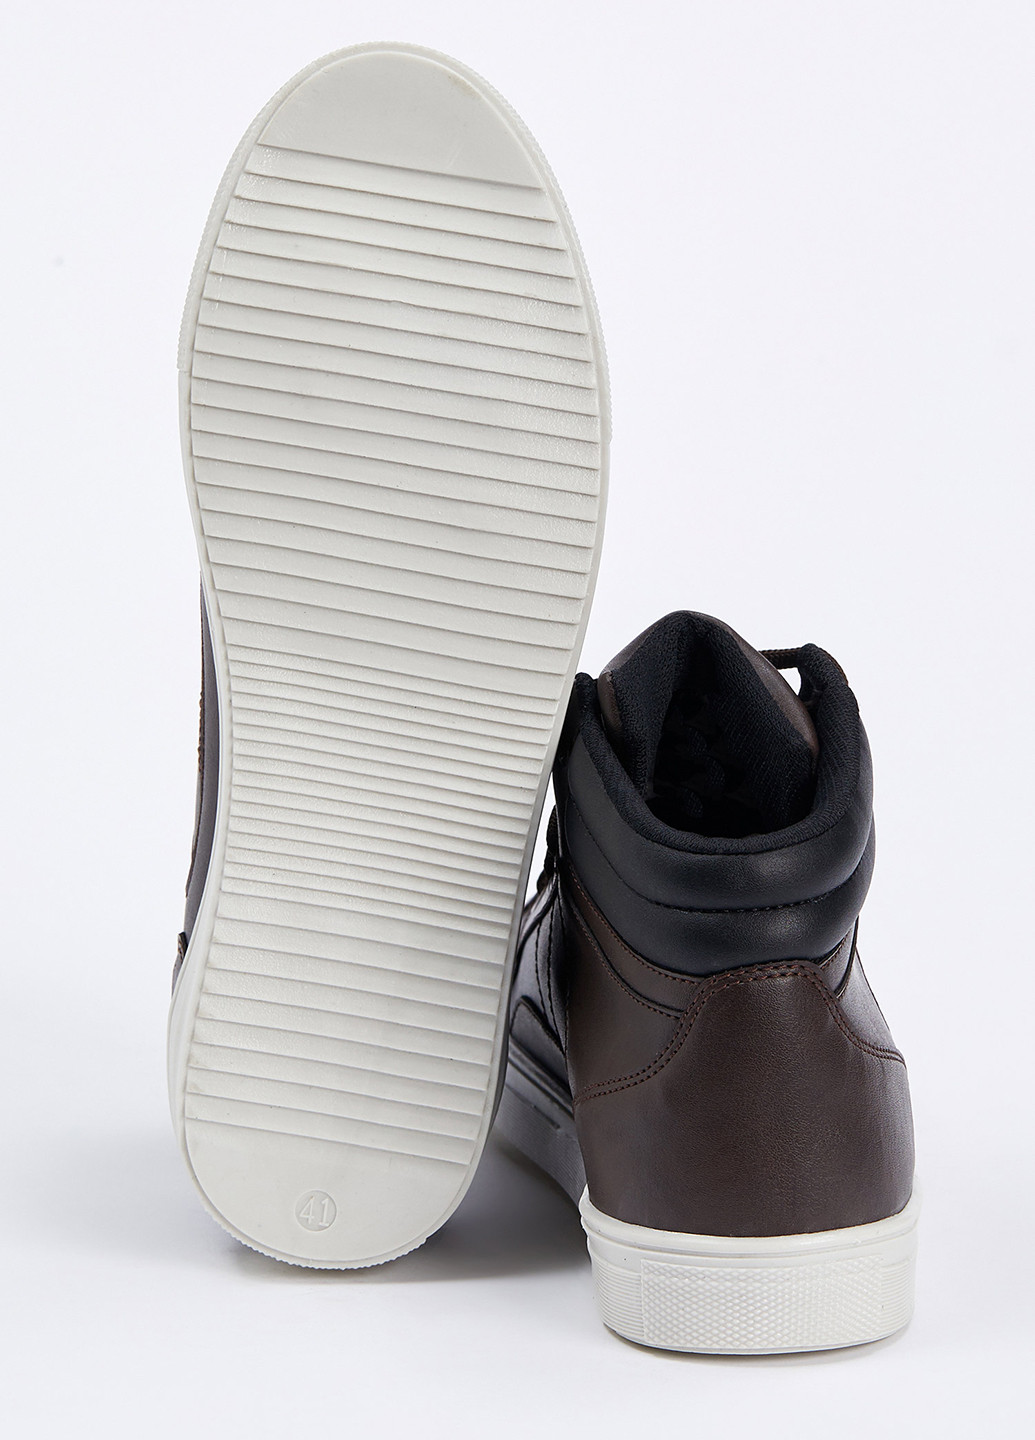 Темно-коричневые ботинки DeFacto